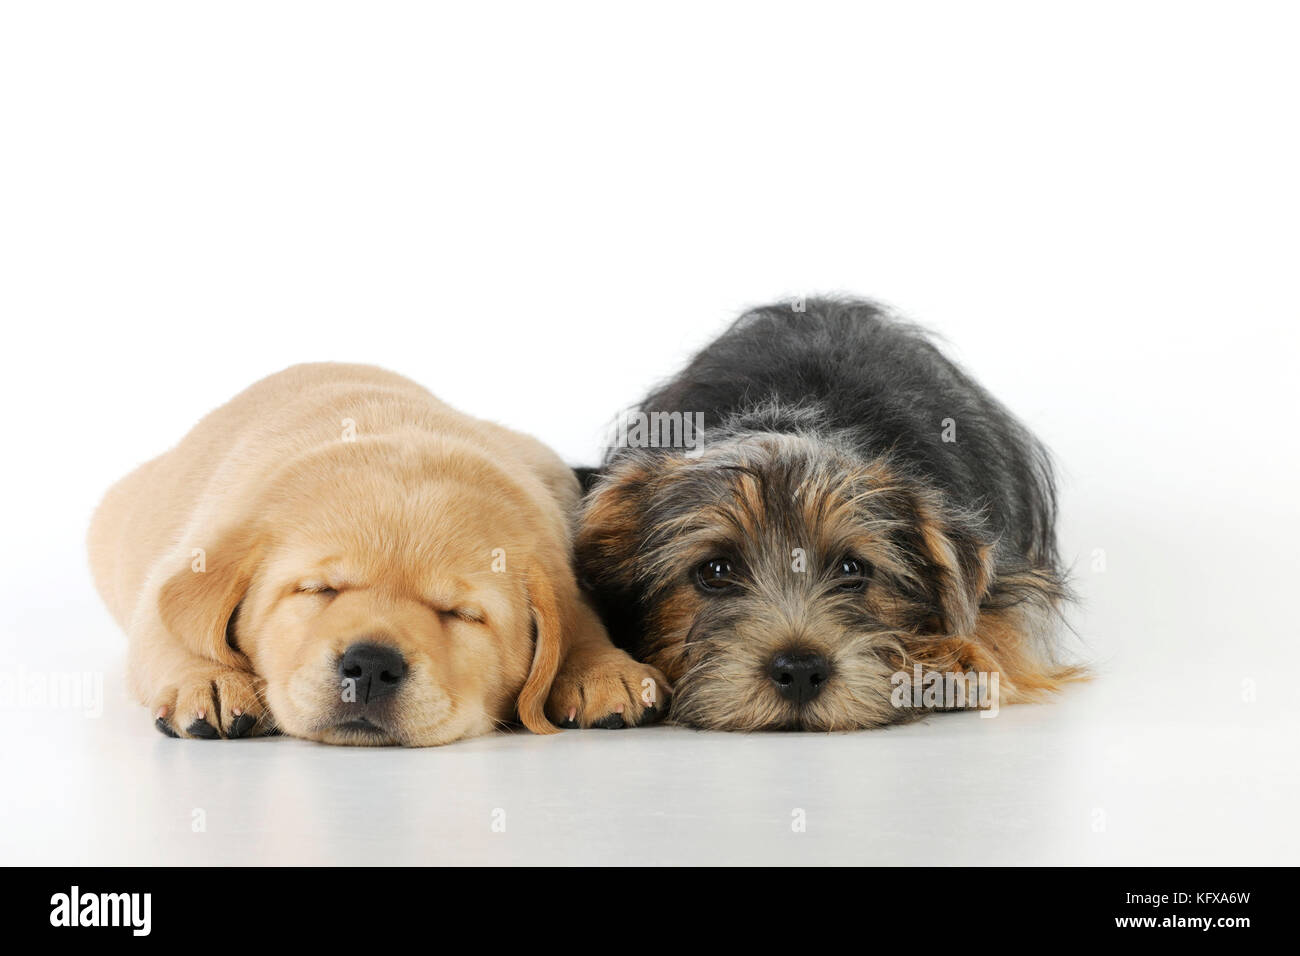 DOG. Yellow labrador puppy lying next to norfolk terrier puppy Stock Photo